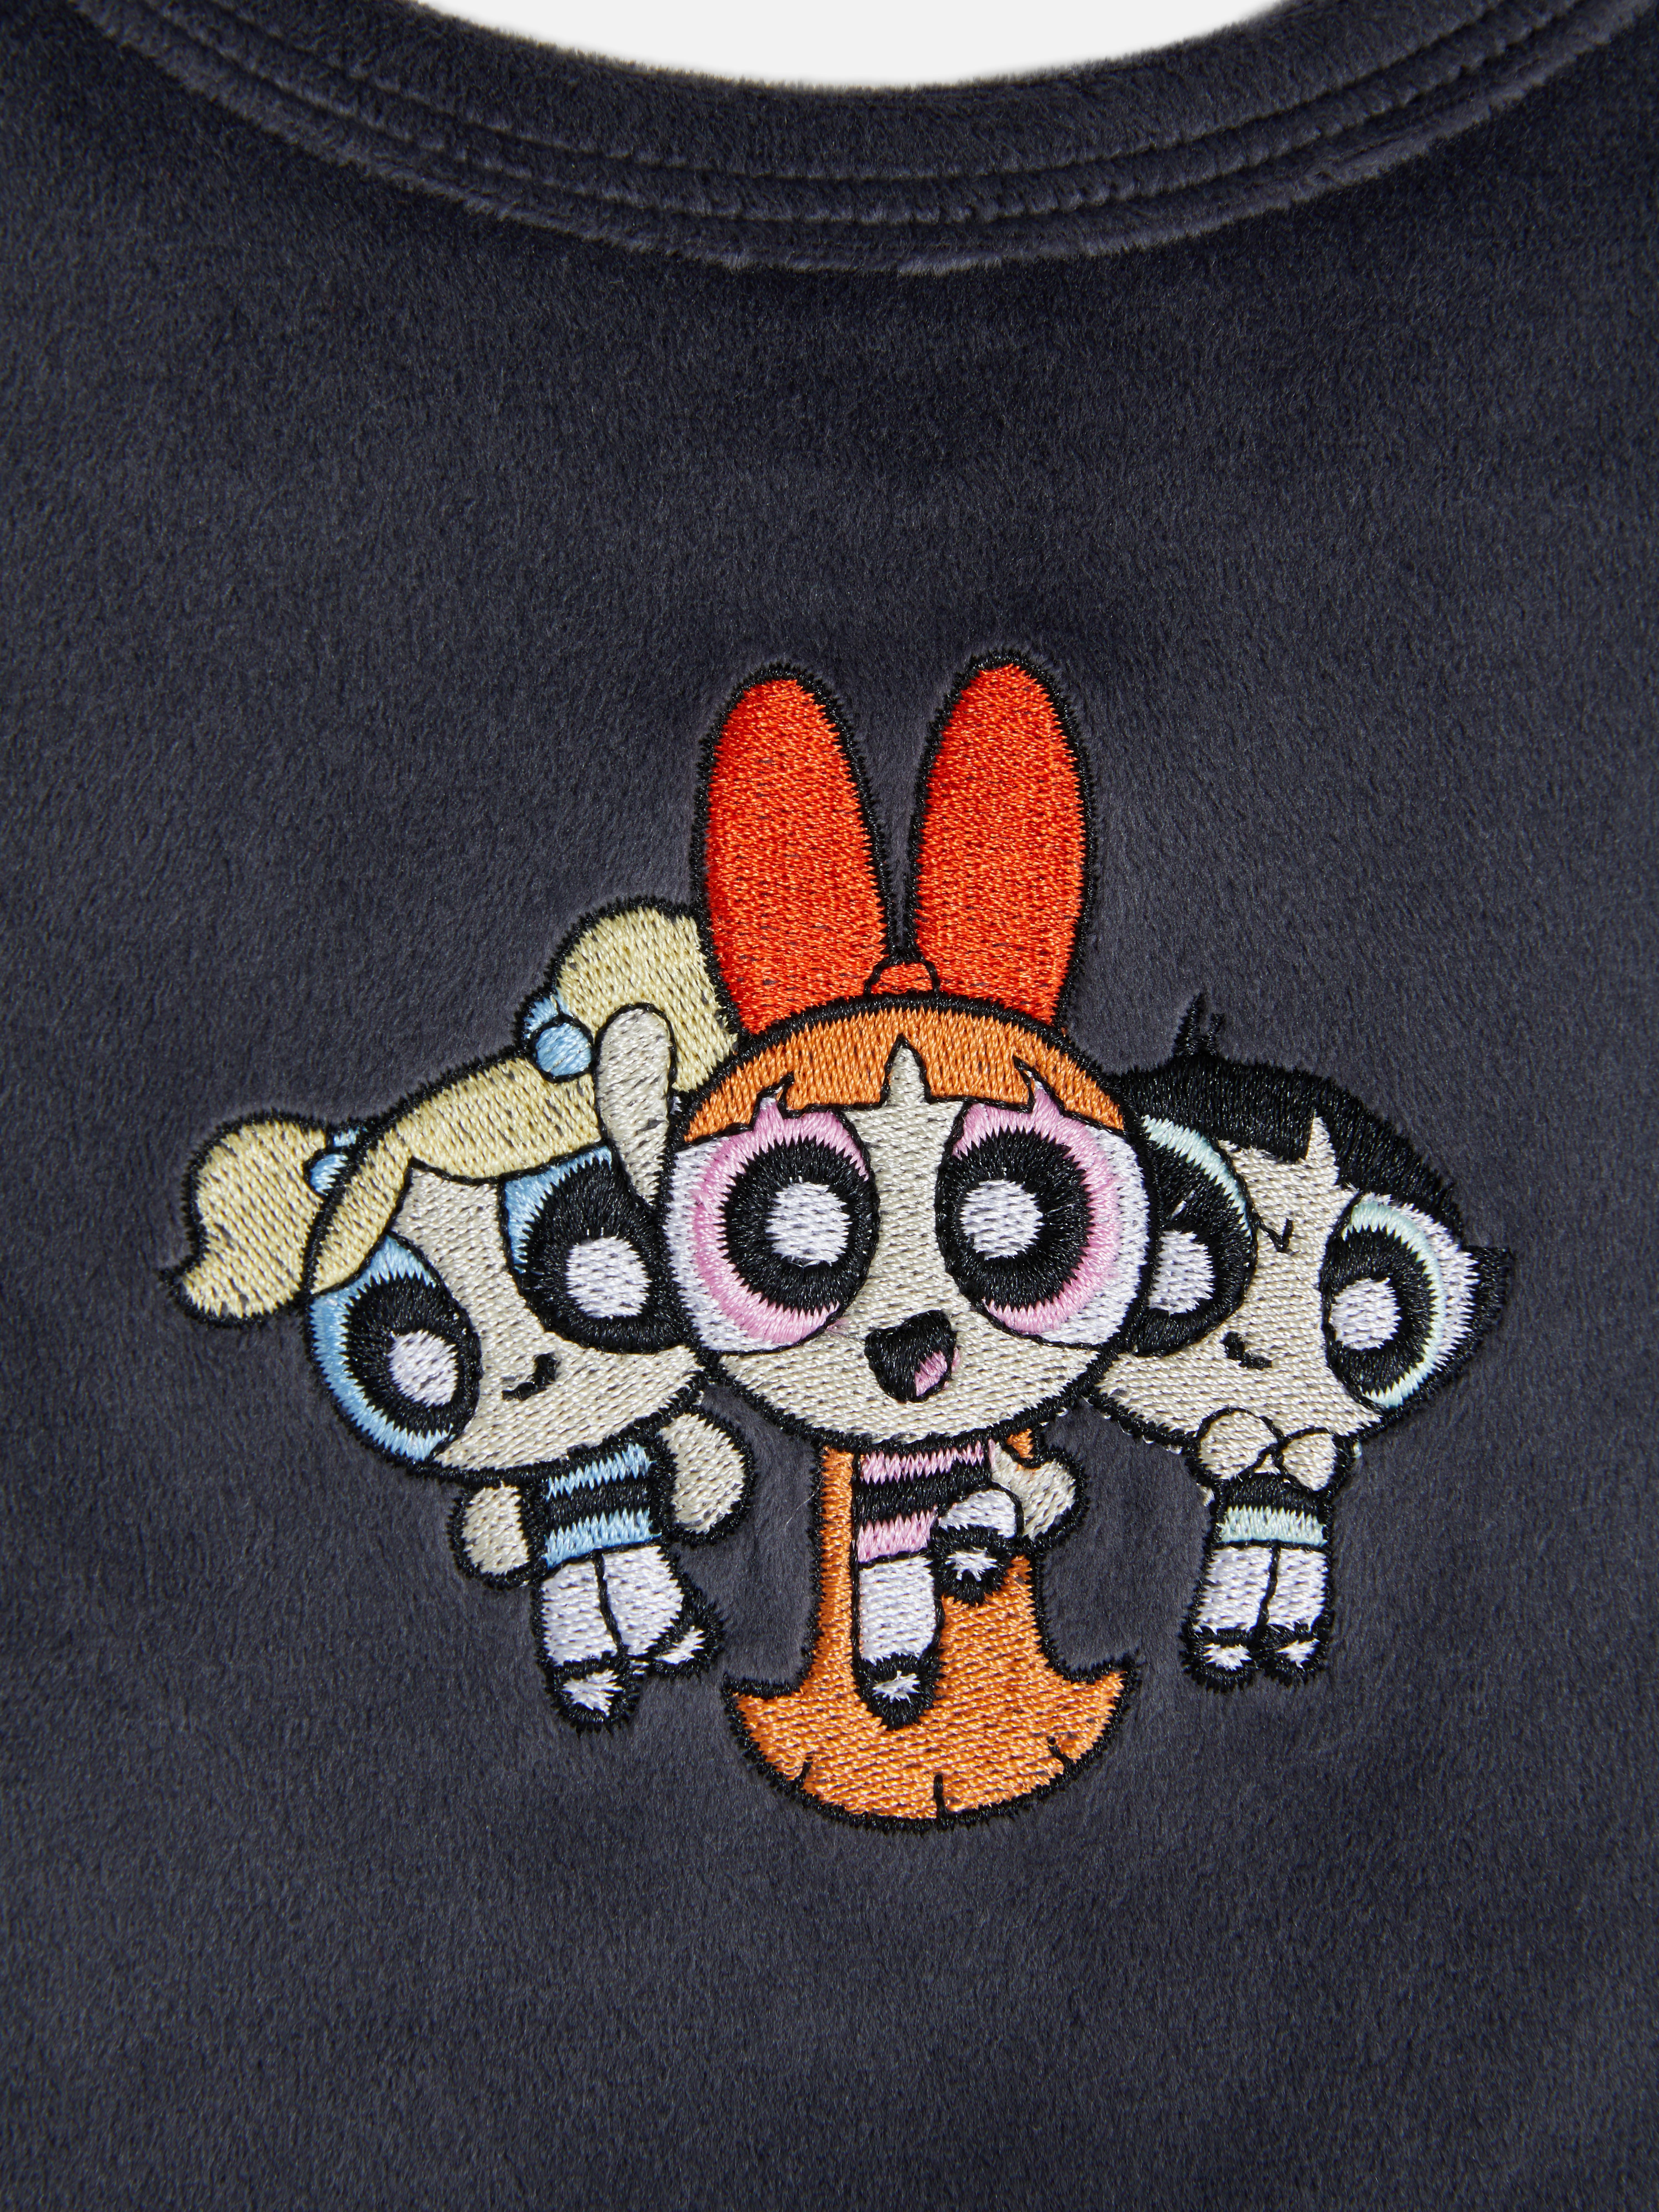 The Powerpuff Girls Minky Pyjama Top